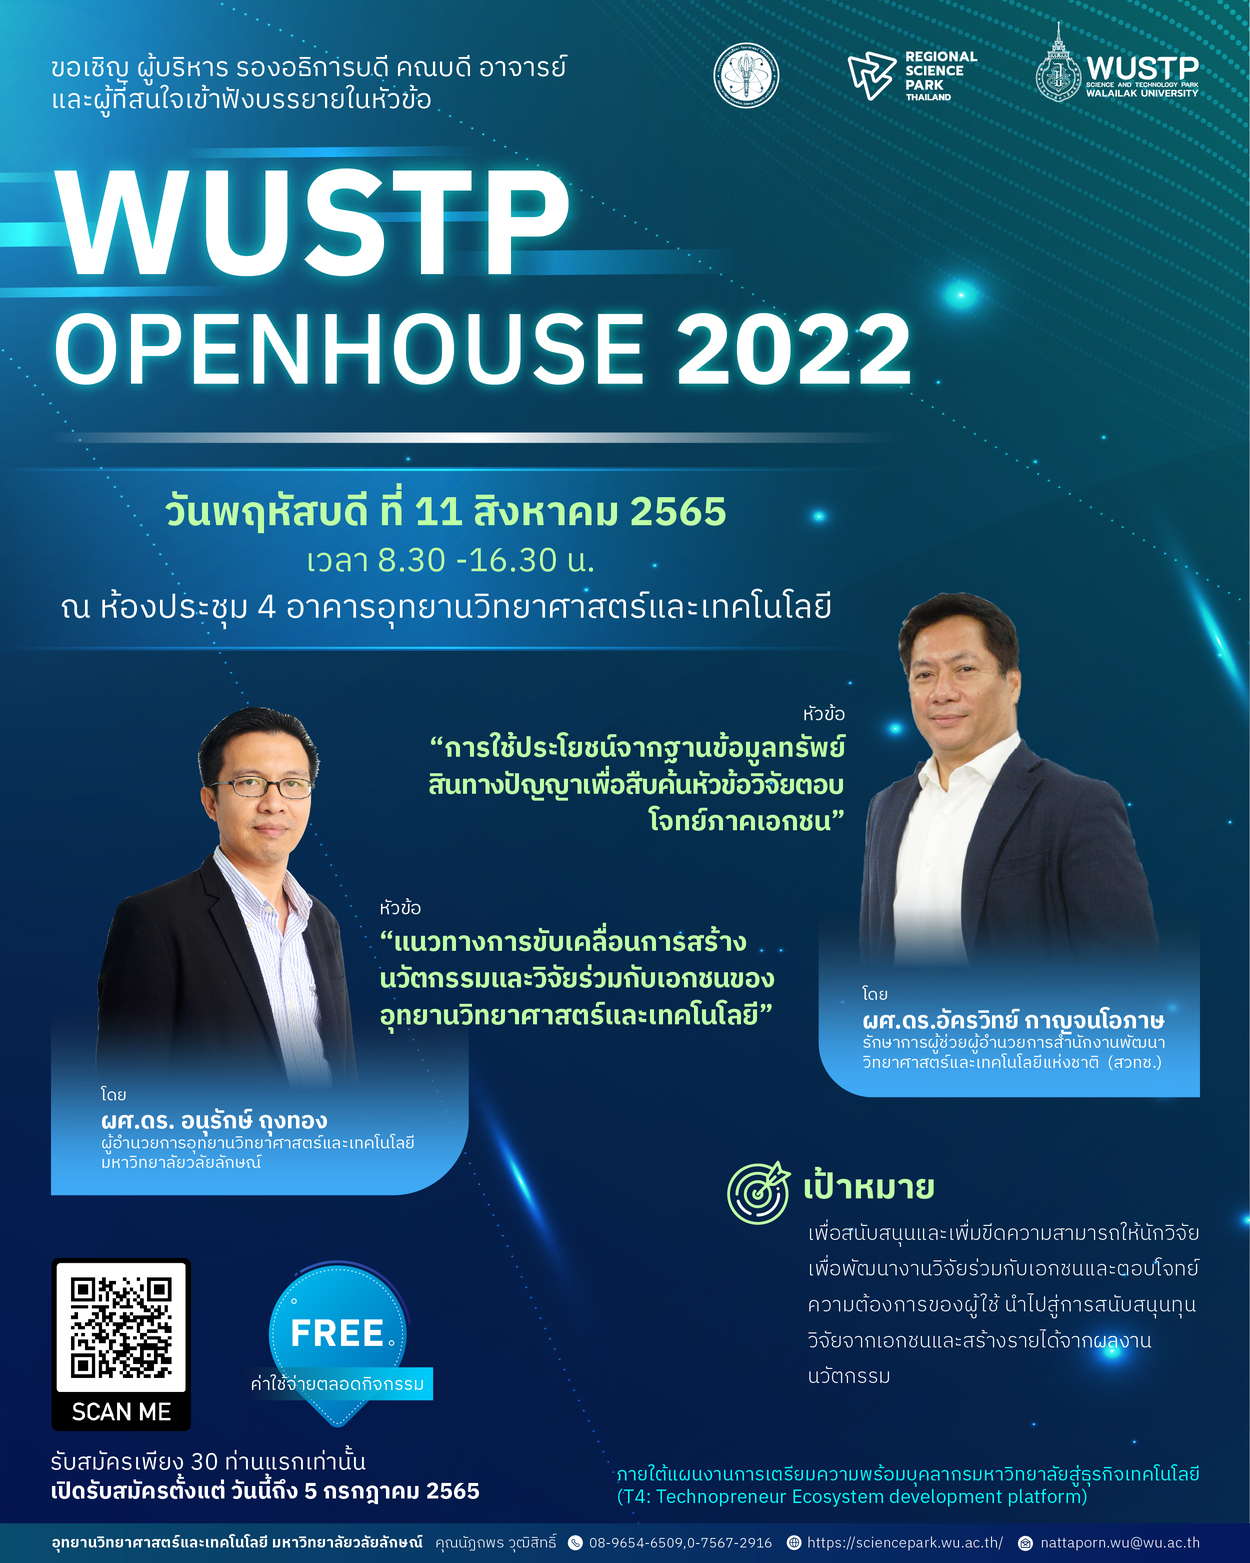 WUSTP openhouse 2022